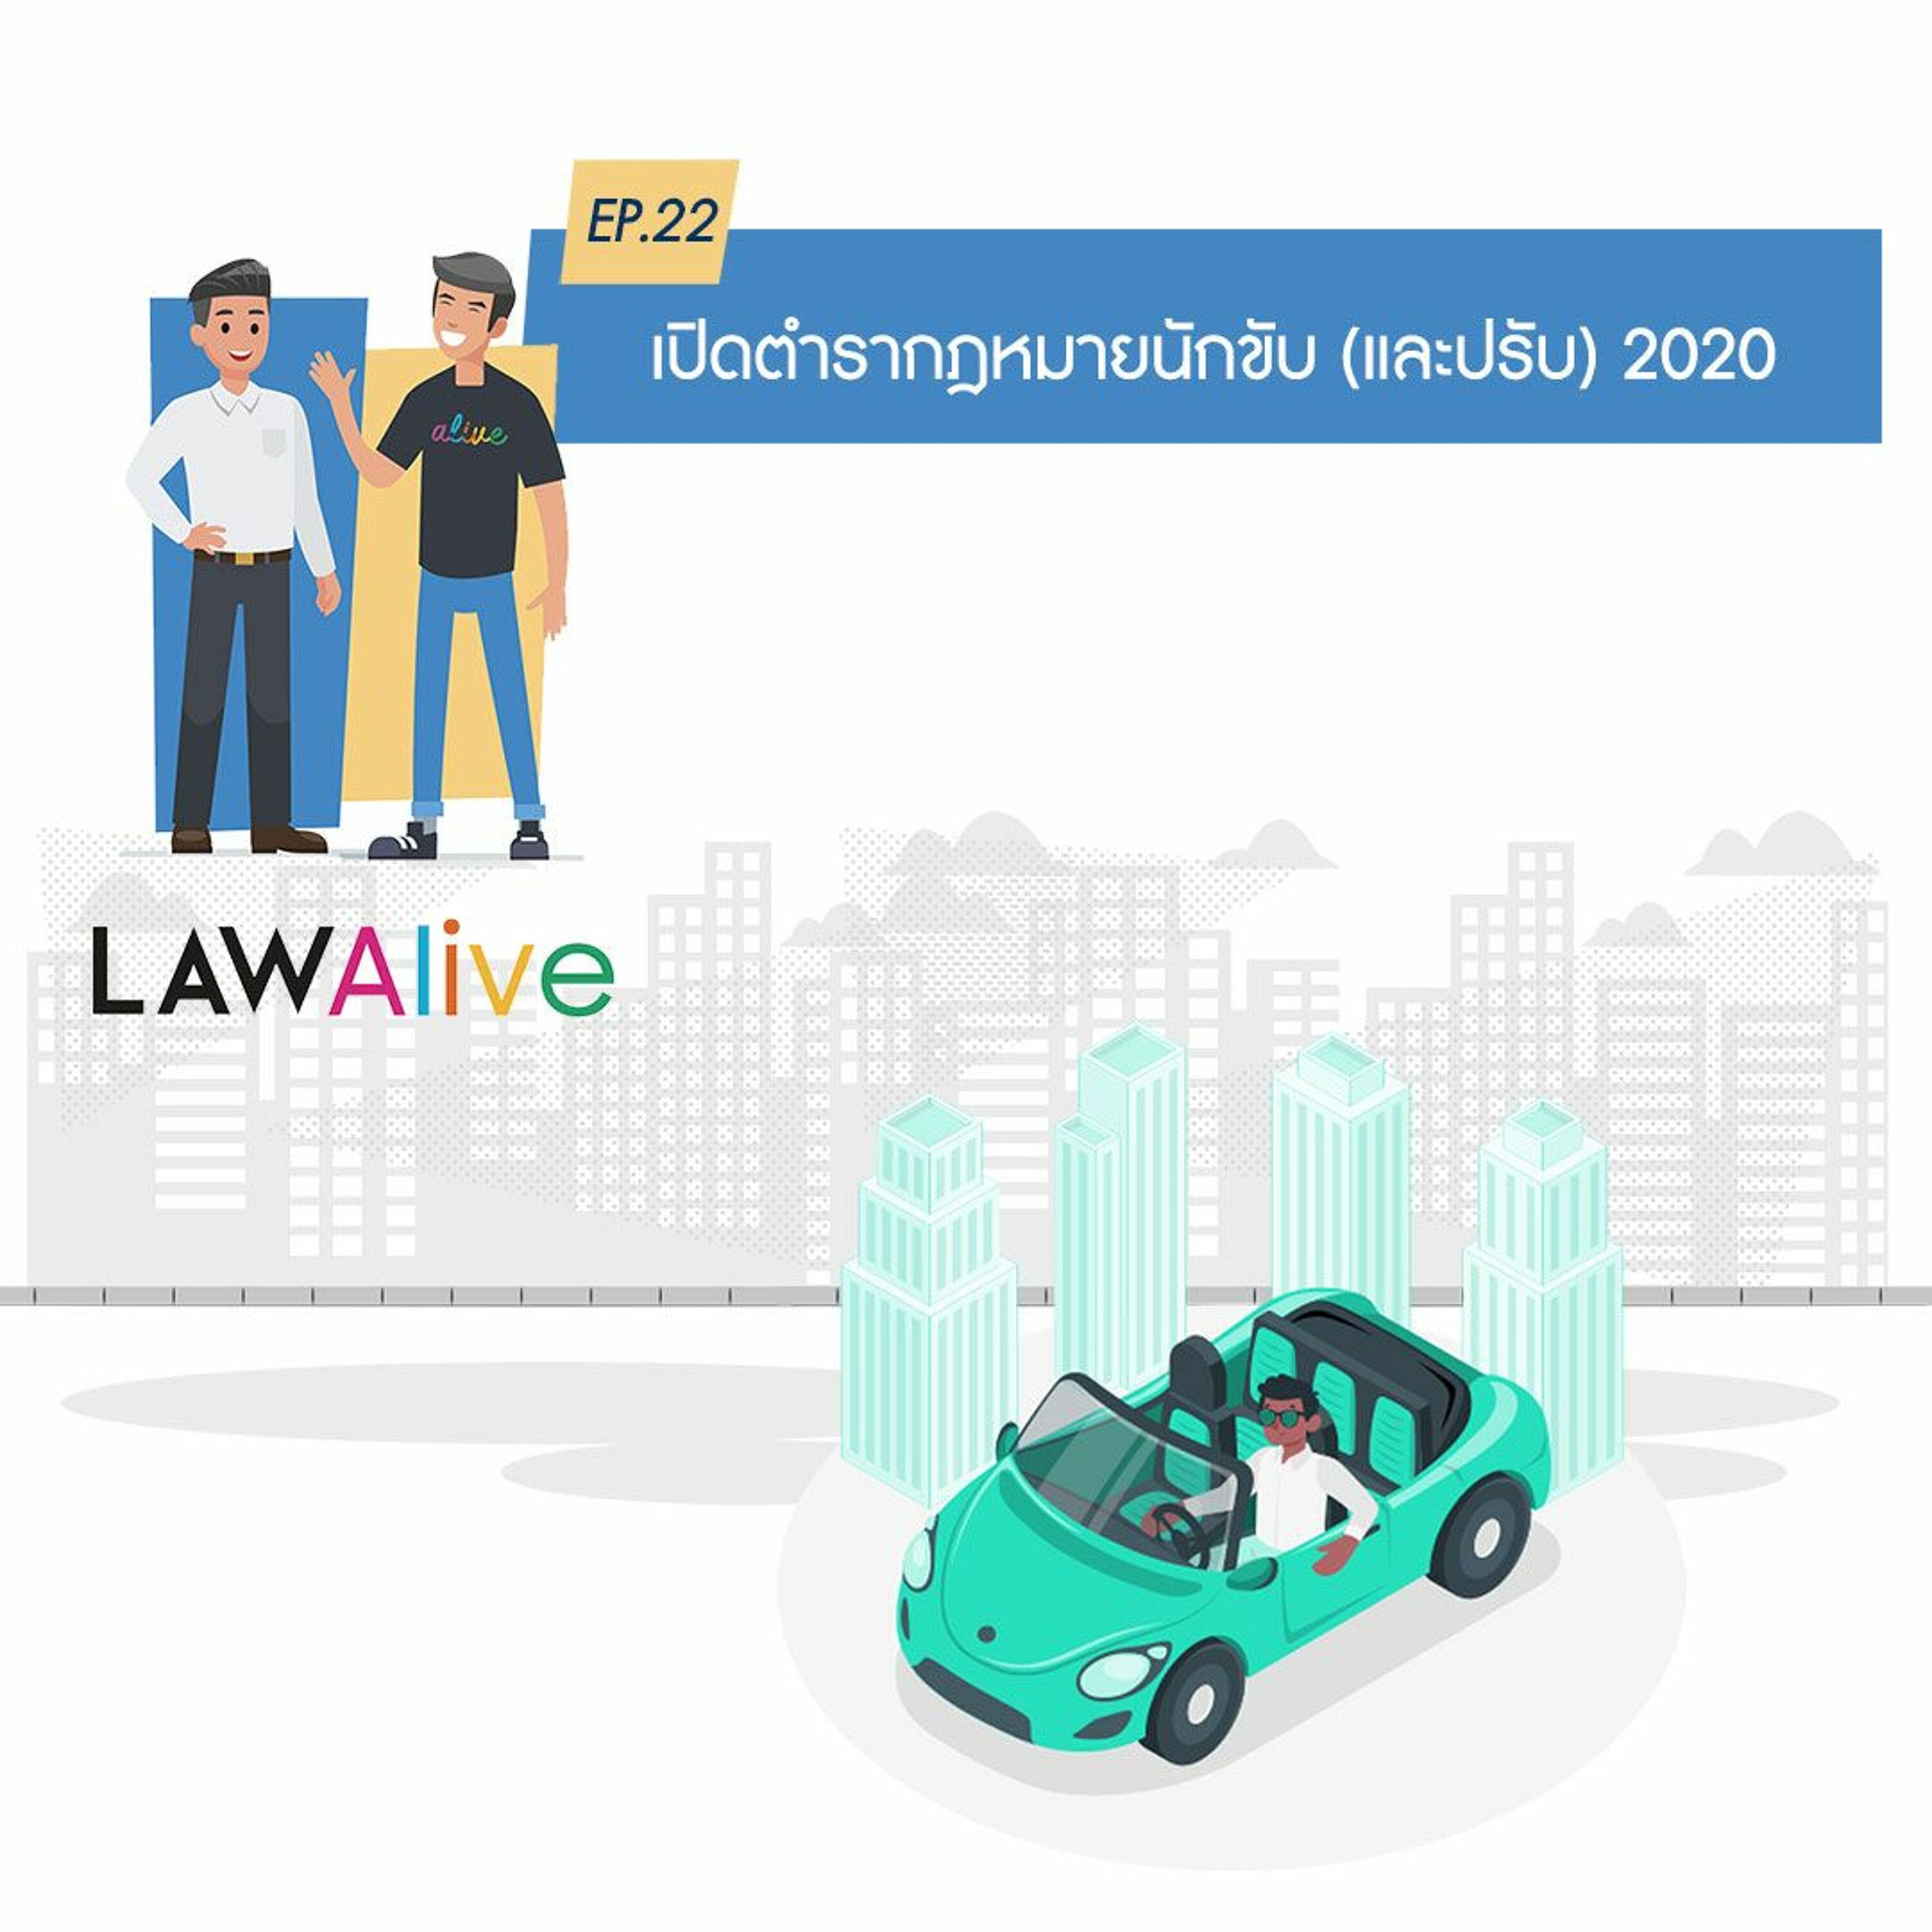 Law Alive Ep.22 - เปิดตำรากฎหมายนักขับ (และปรับ) 2020